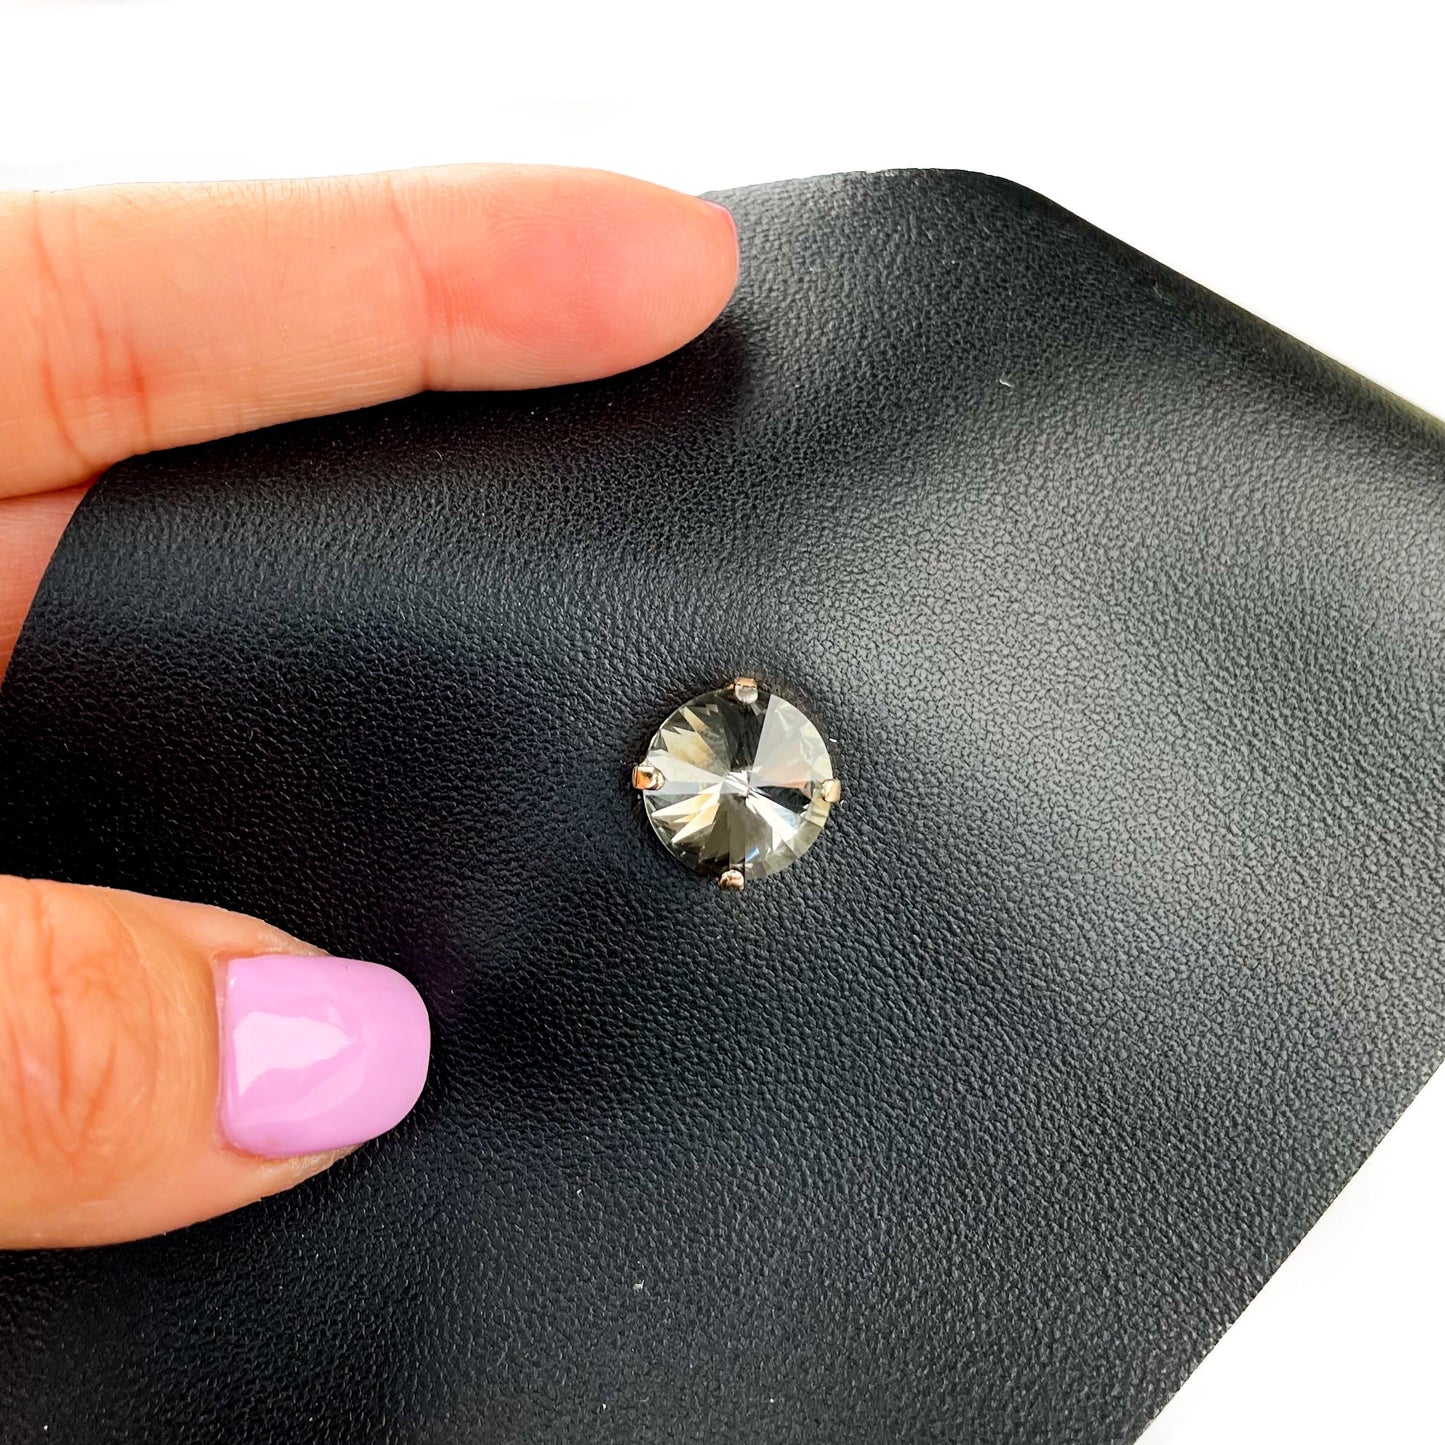 Swarovski Crystal For Leather / Round Dark Gemstone / Two Sizes / Silver or Gold